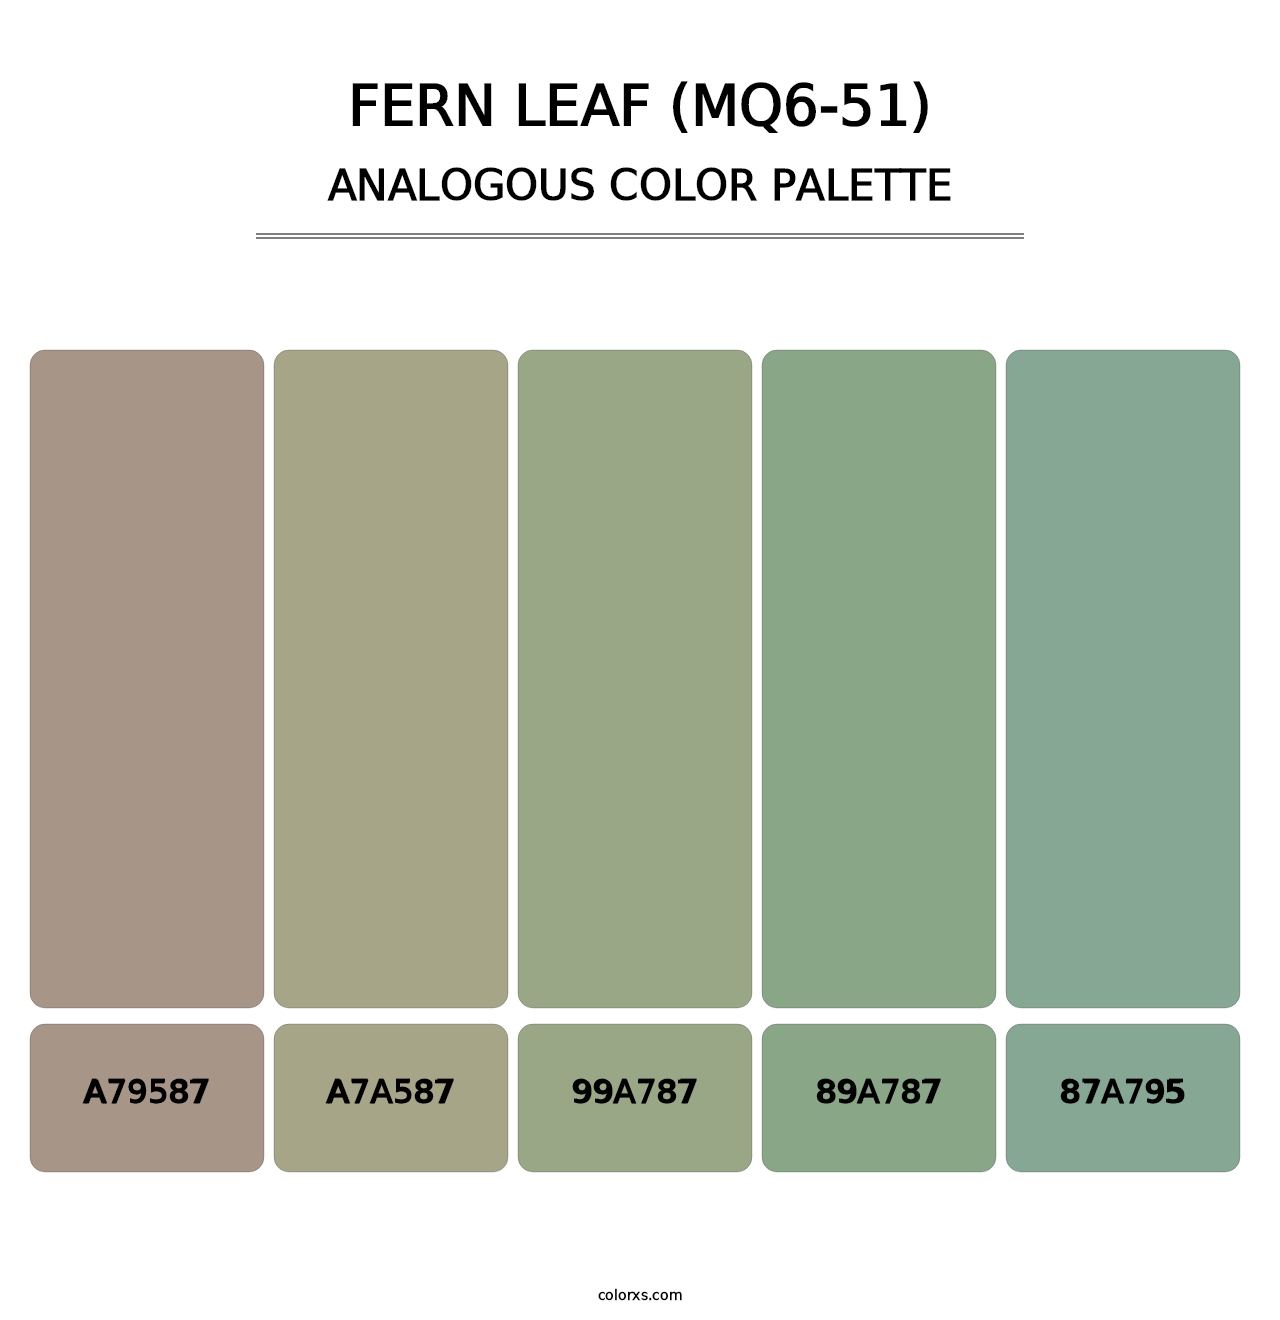 Fern Leaf (MQ6-51) - Analogous Color Palette